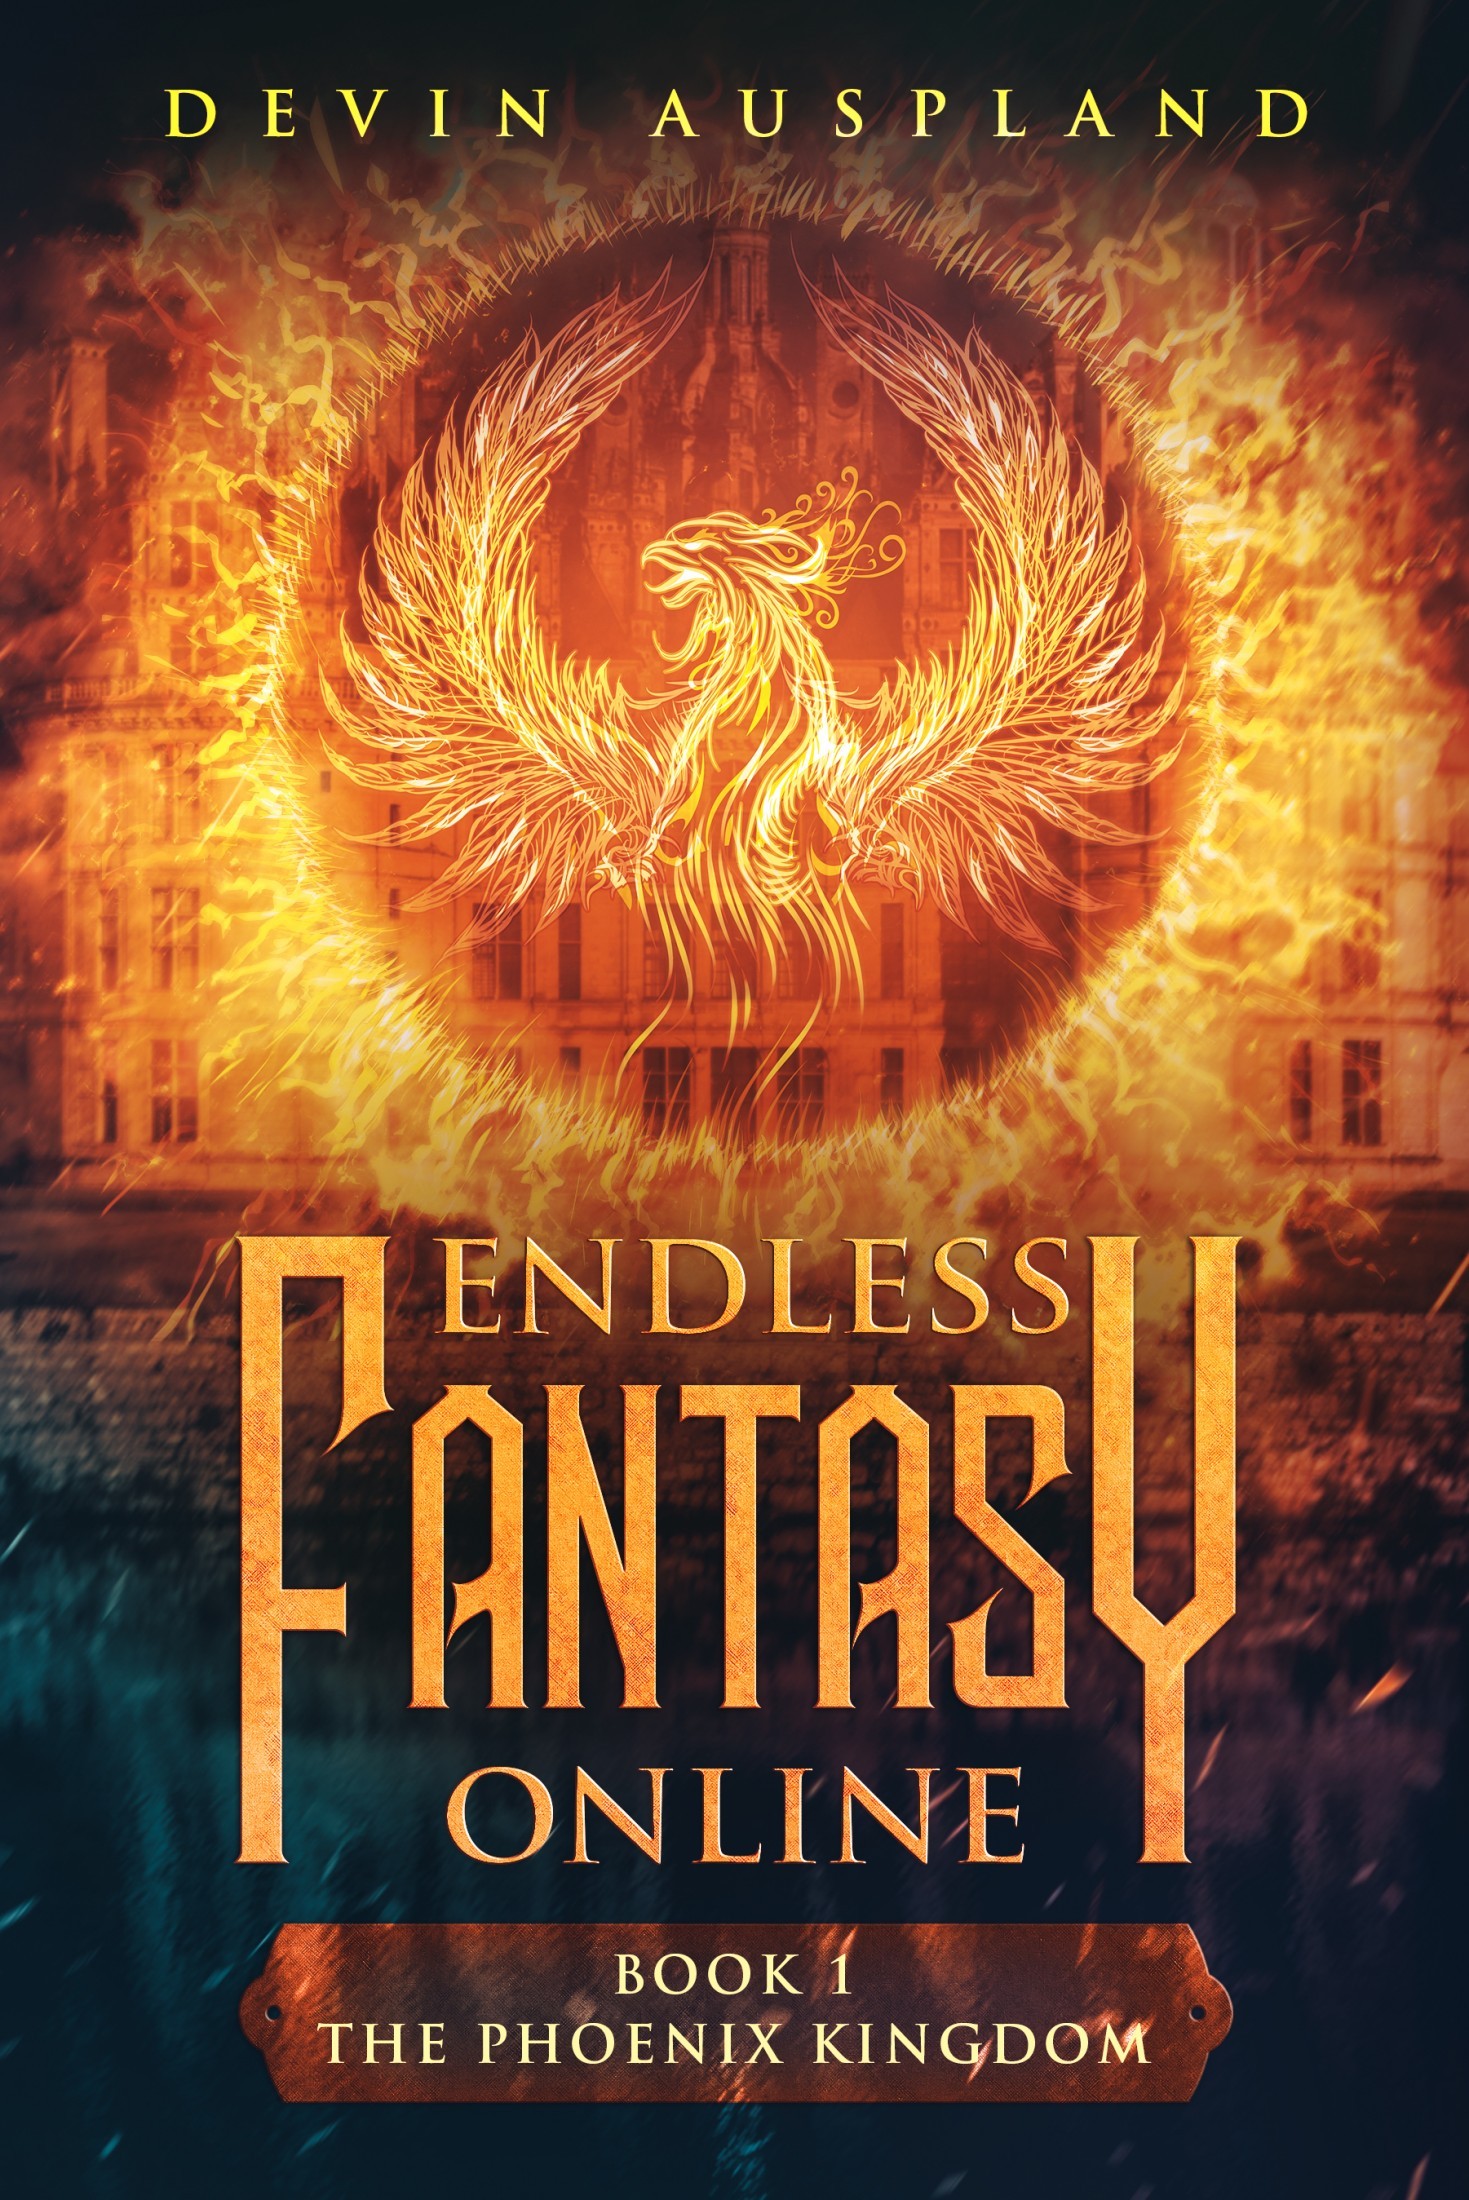 Endless Fantasy Online: The Phoenix Kingdom